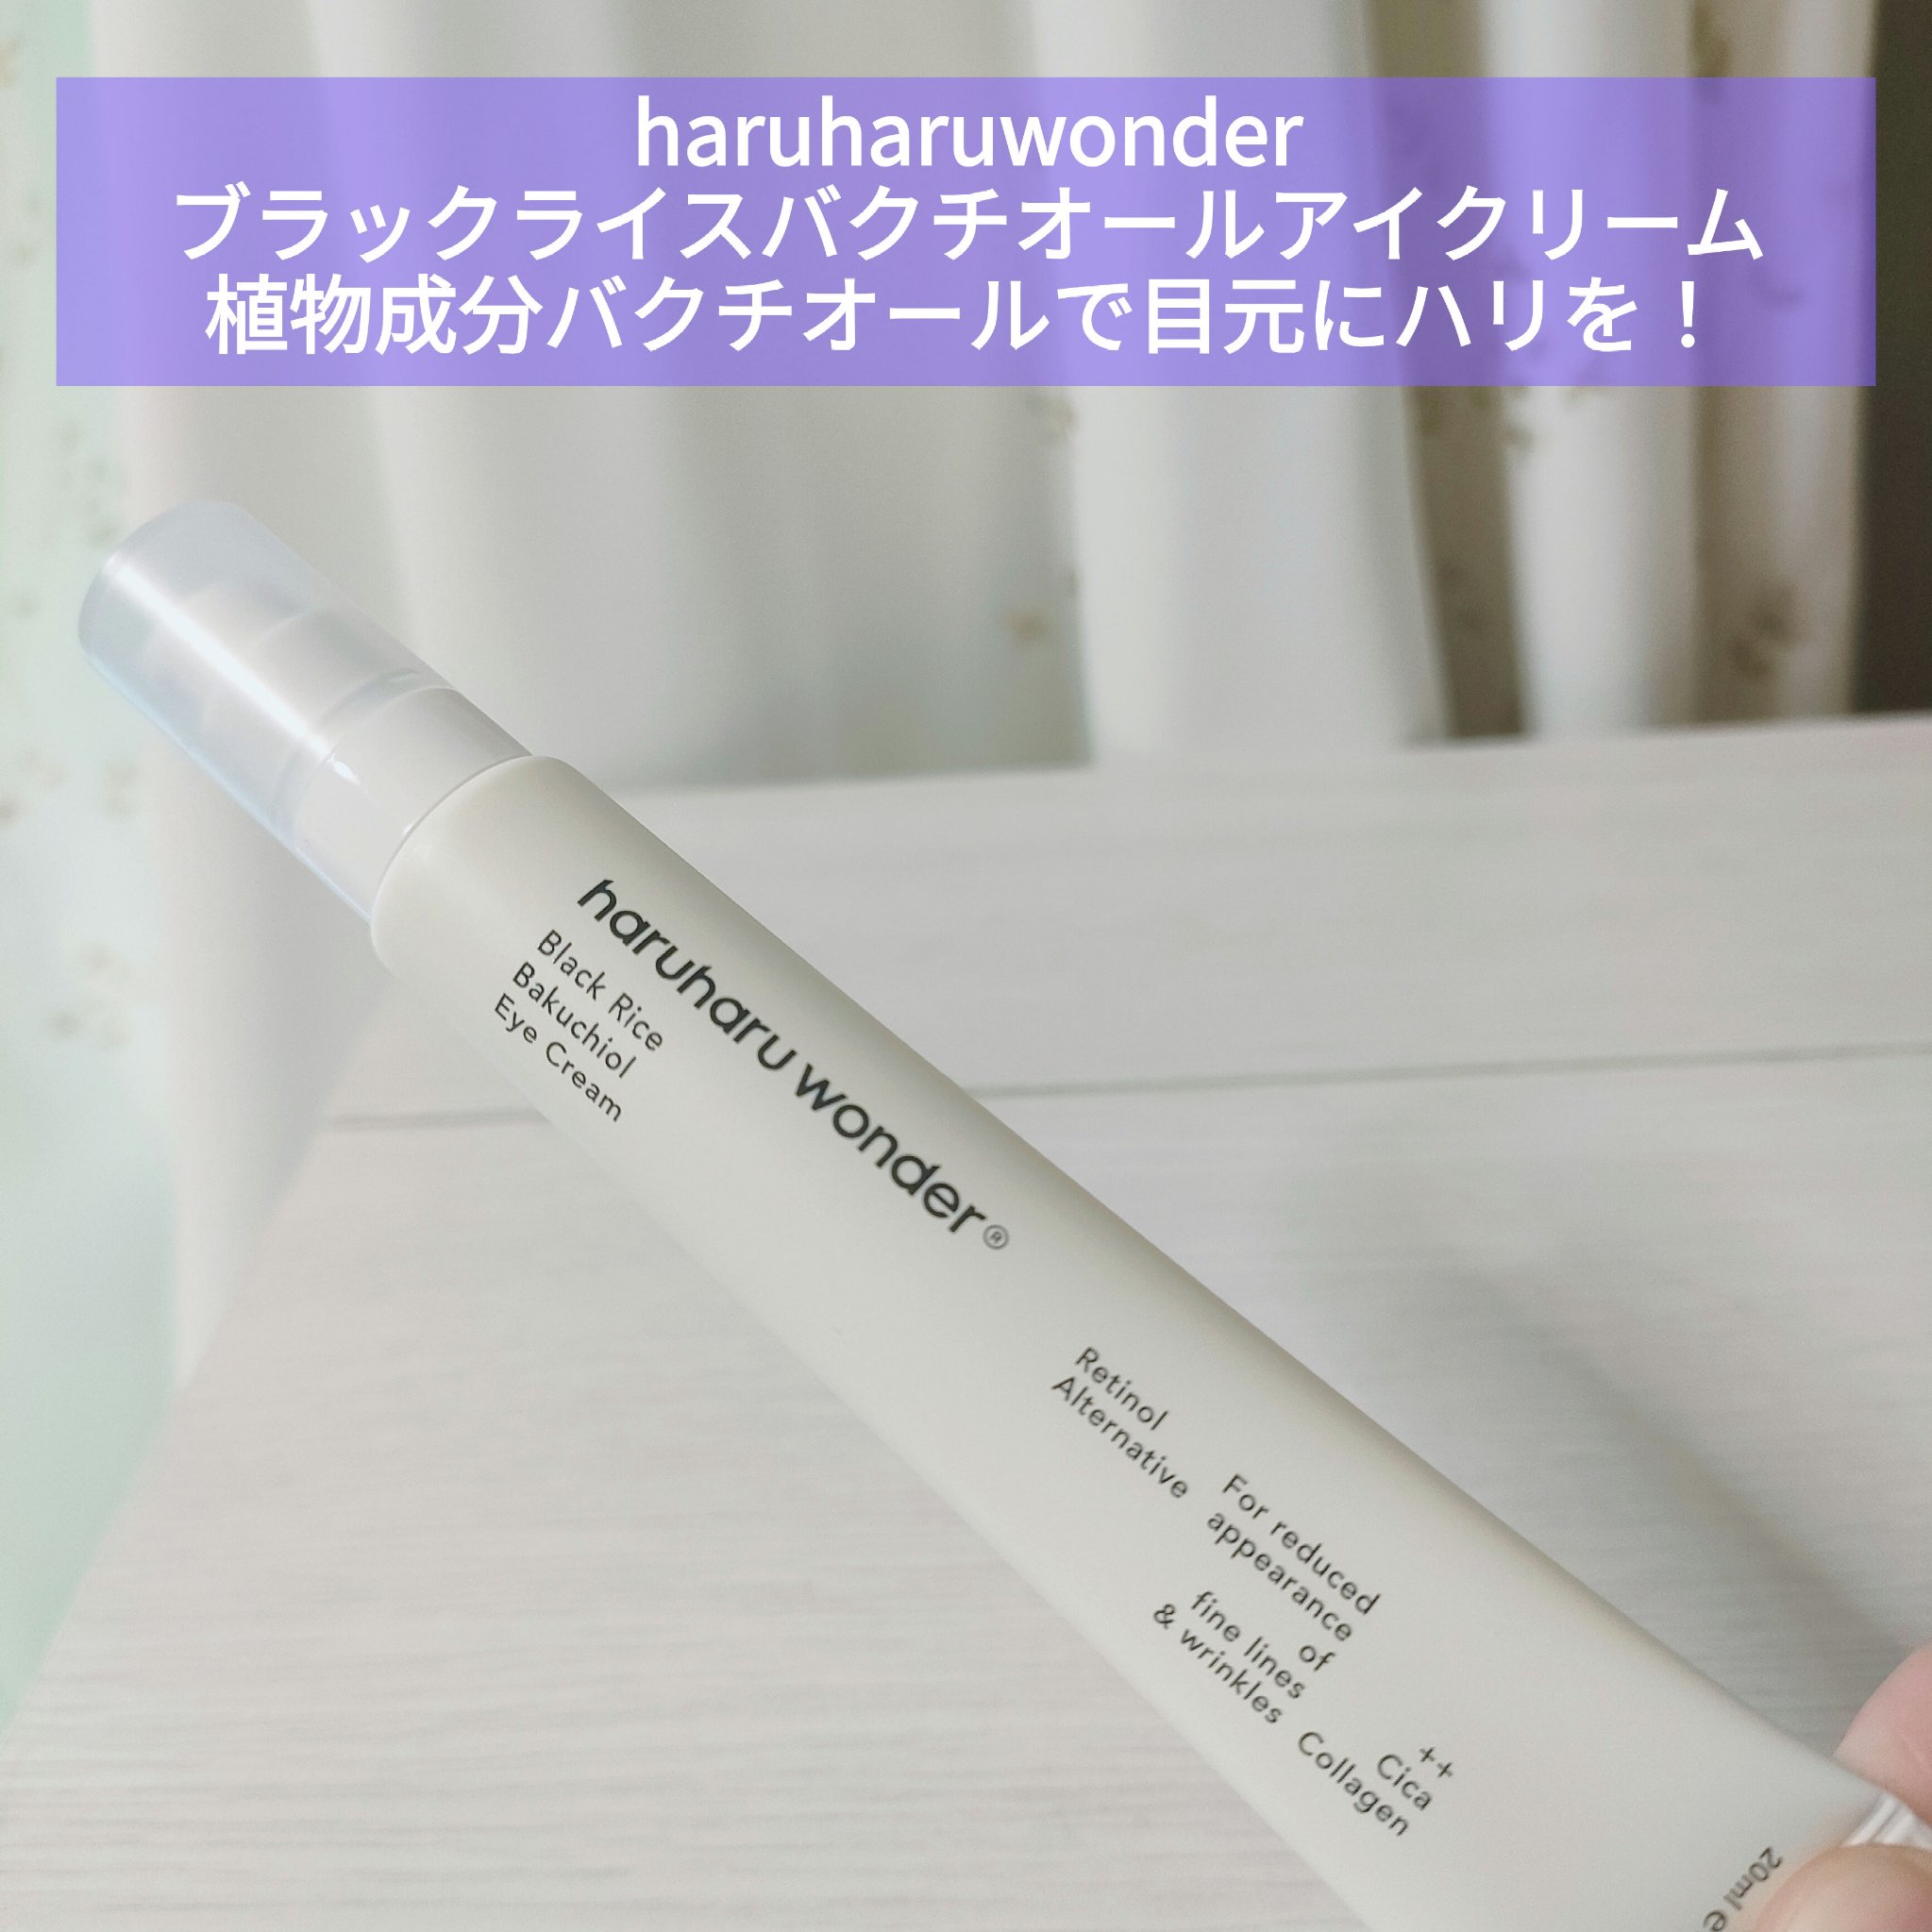 haruharuwonder ブラックライスバクチオールアイクリーム - 基礎化粧品